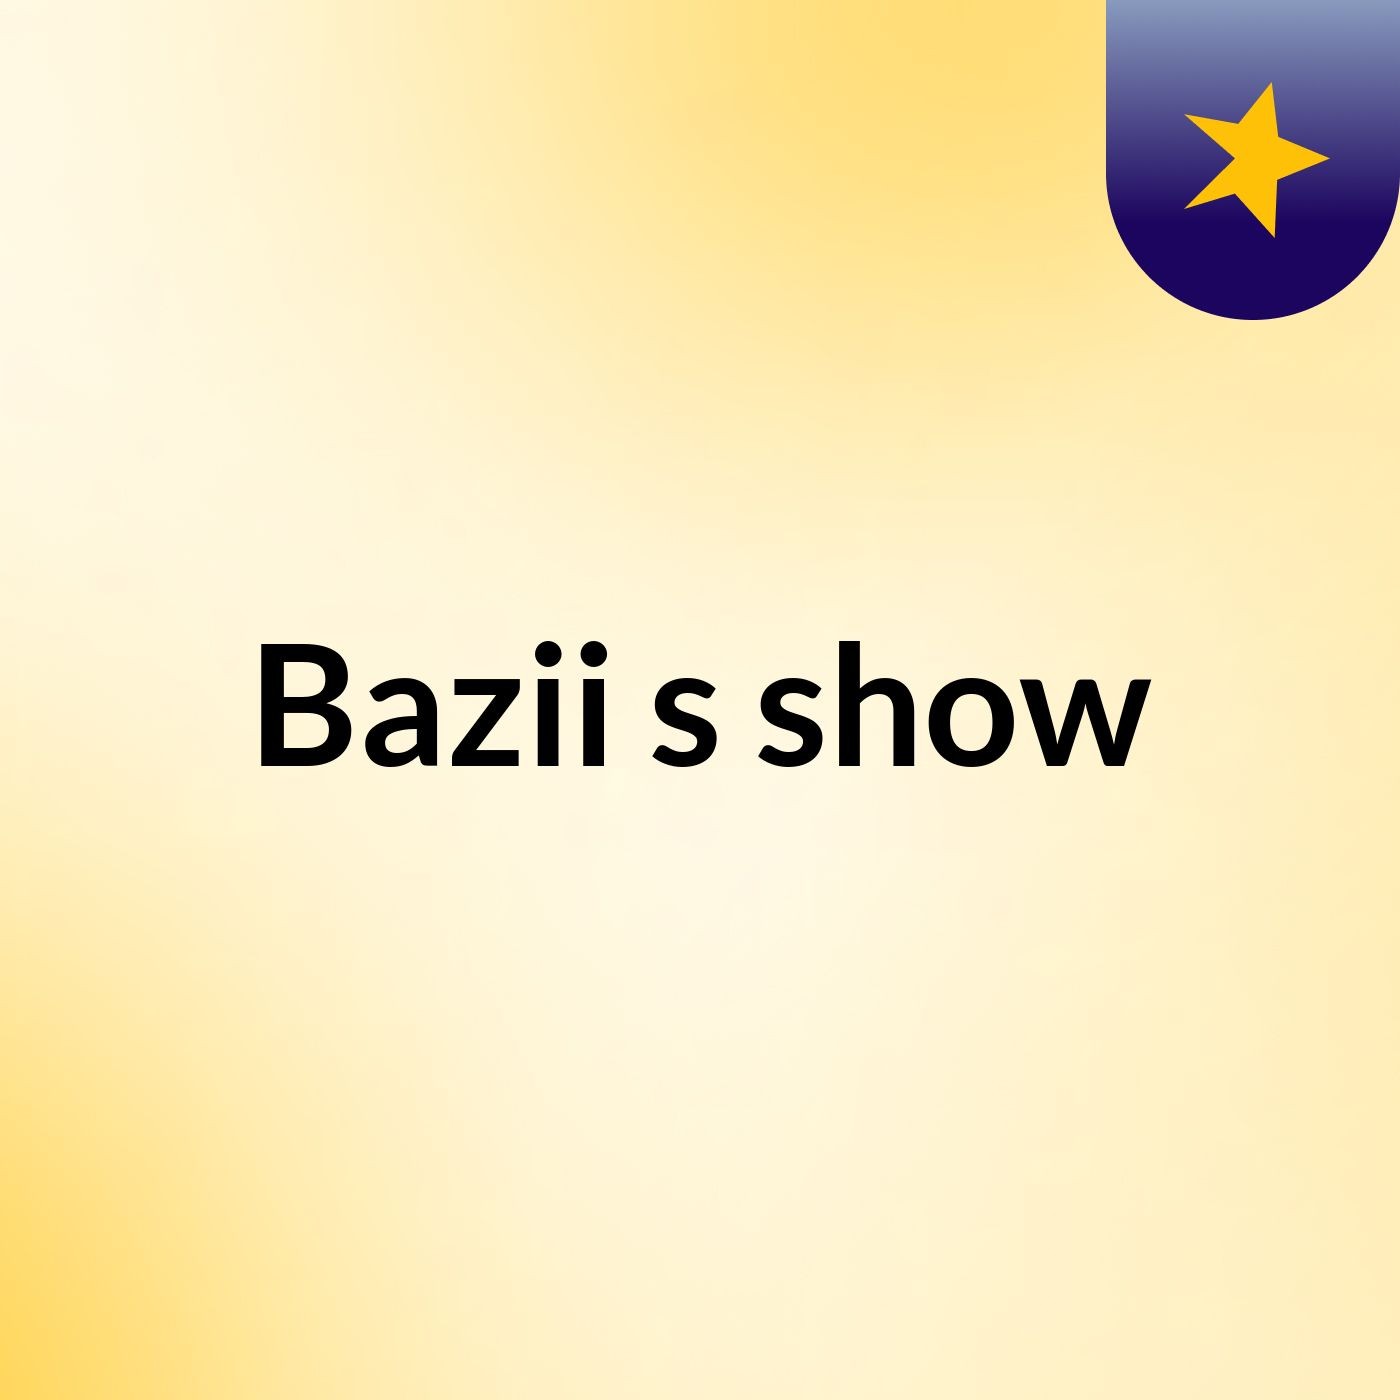 Bazii's show